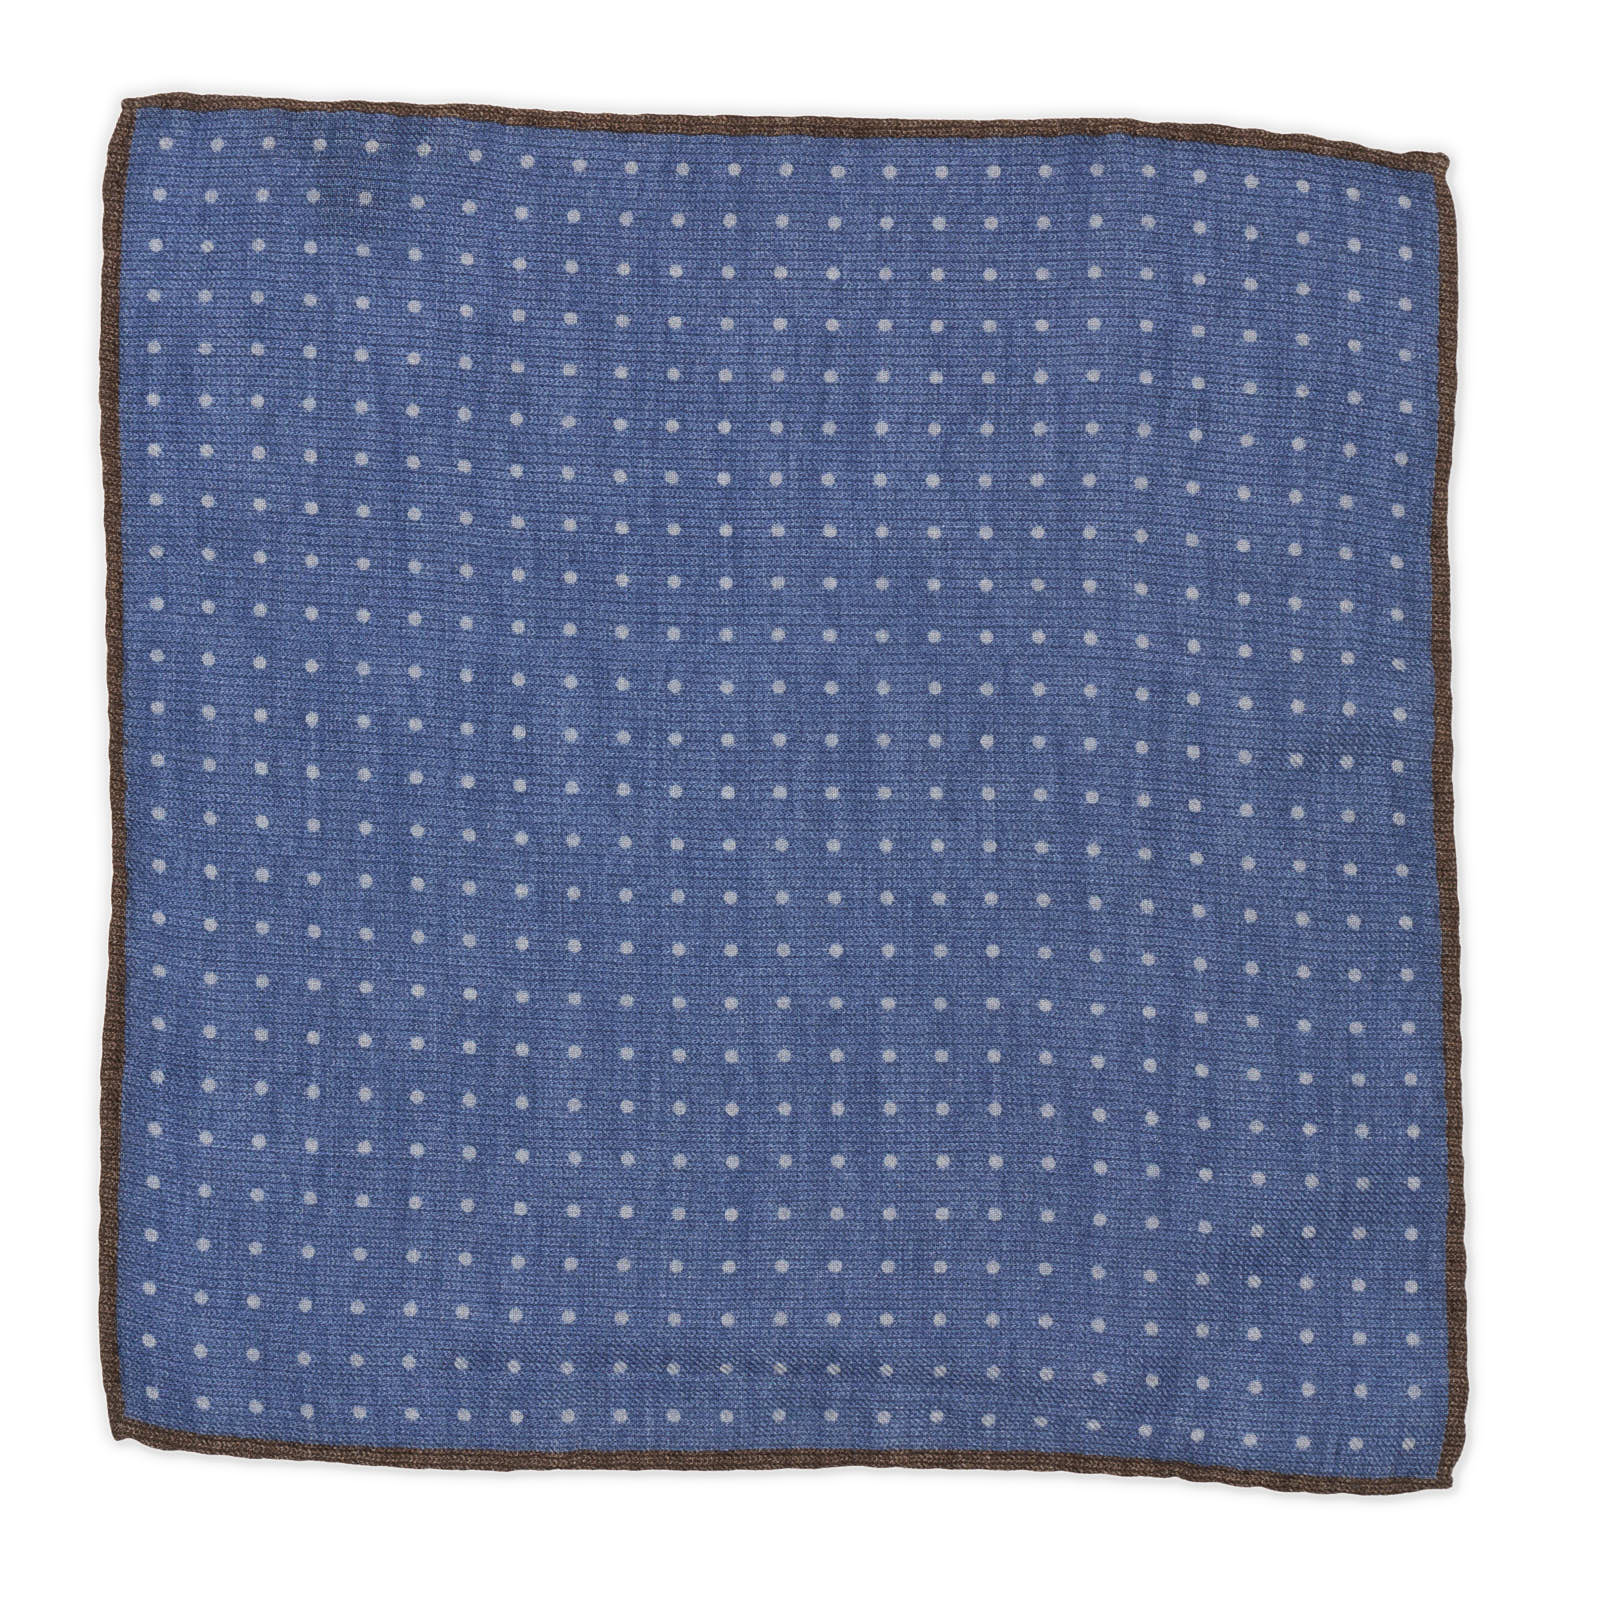 ROSI Handmade Blue Dot Wool Pocket Square NEW 30cm x 30cm